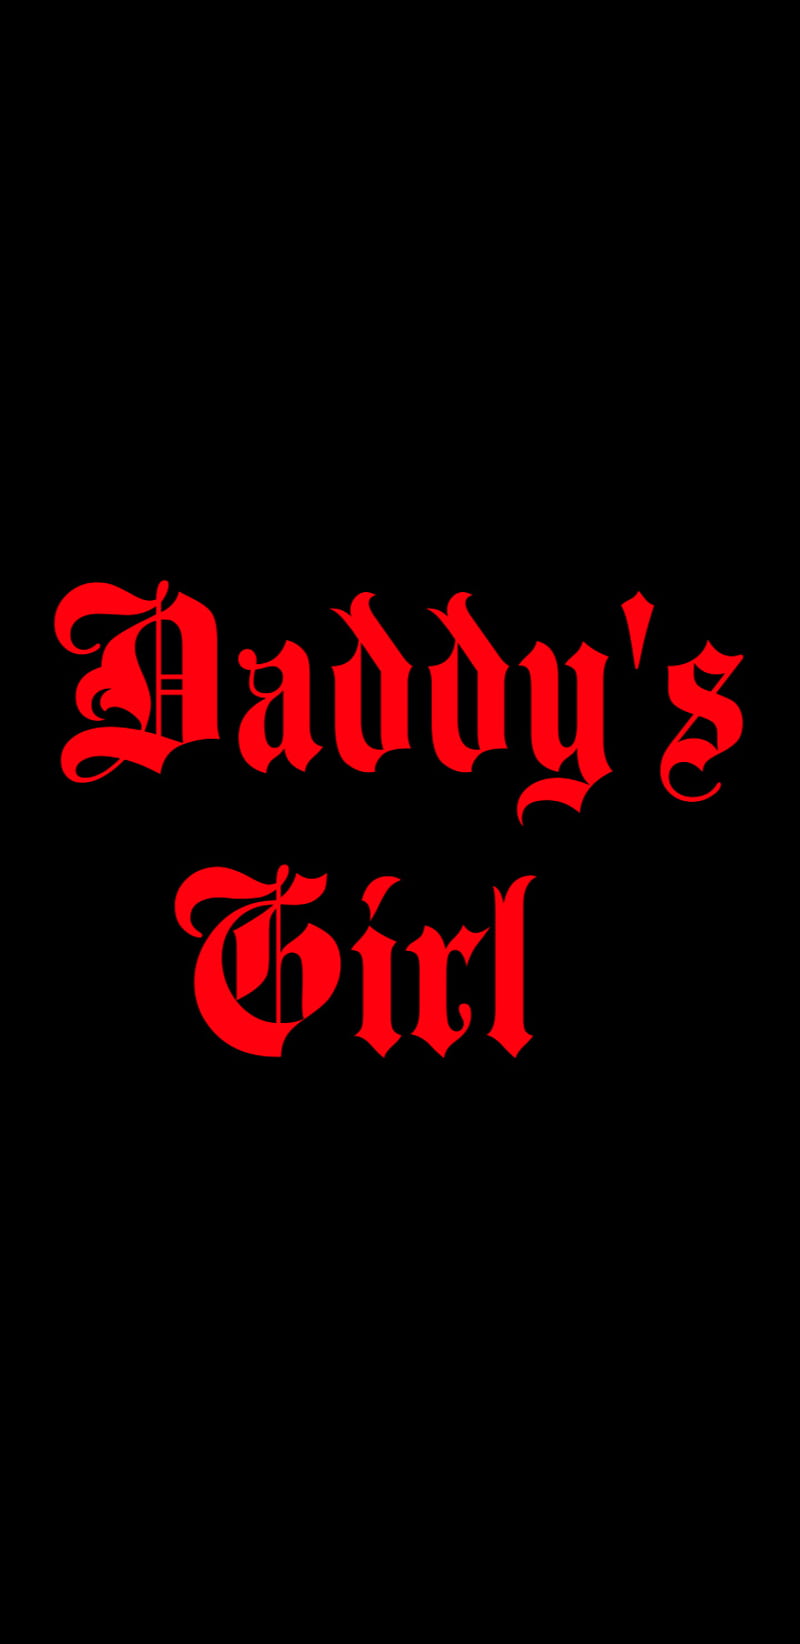 1920x1080px 1080p Free Download Daddygirlloe Bdsm Dad Daddy